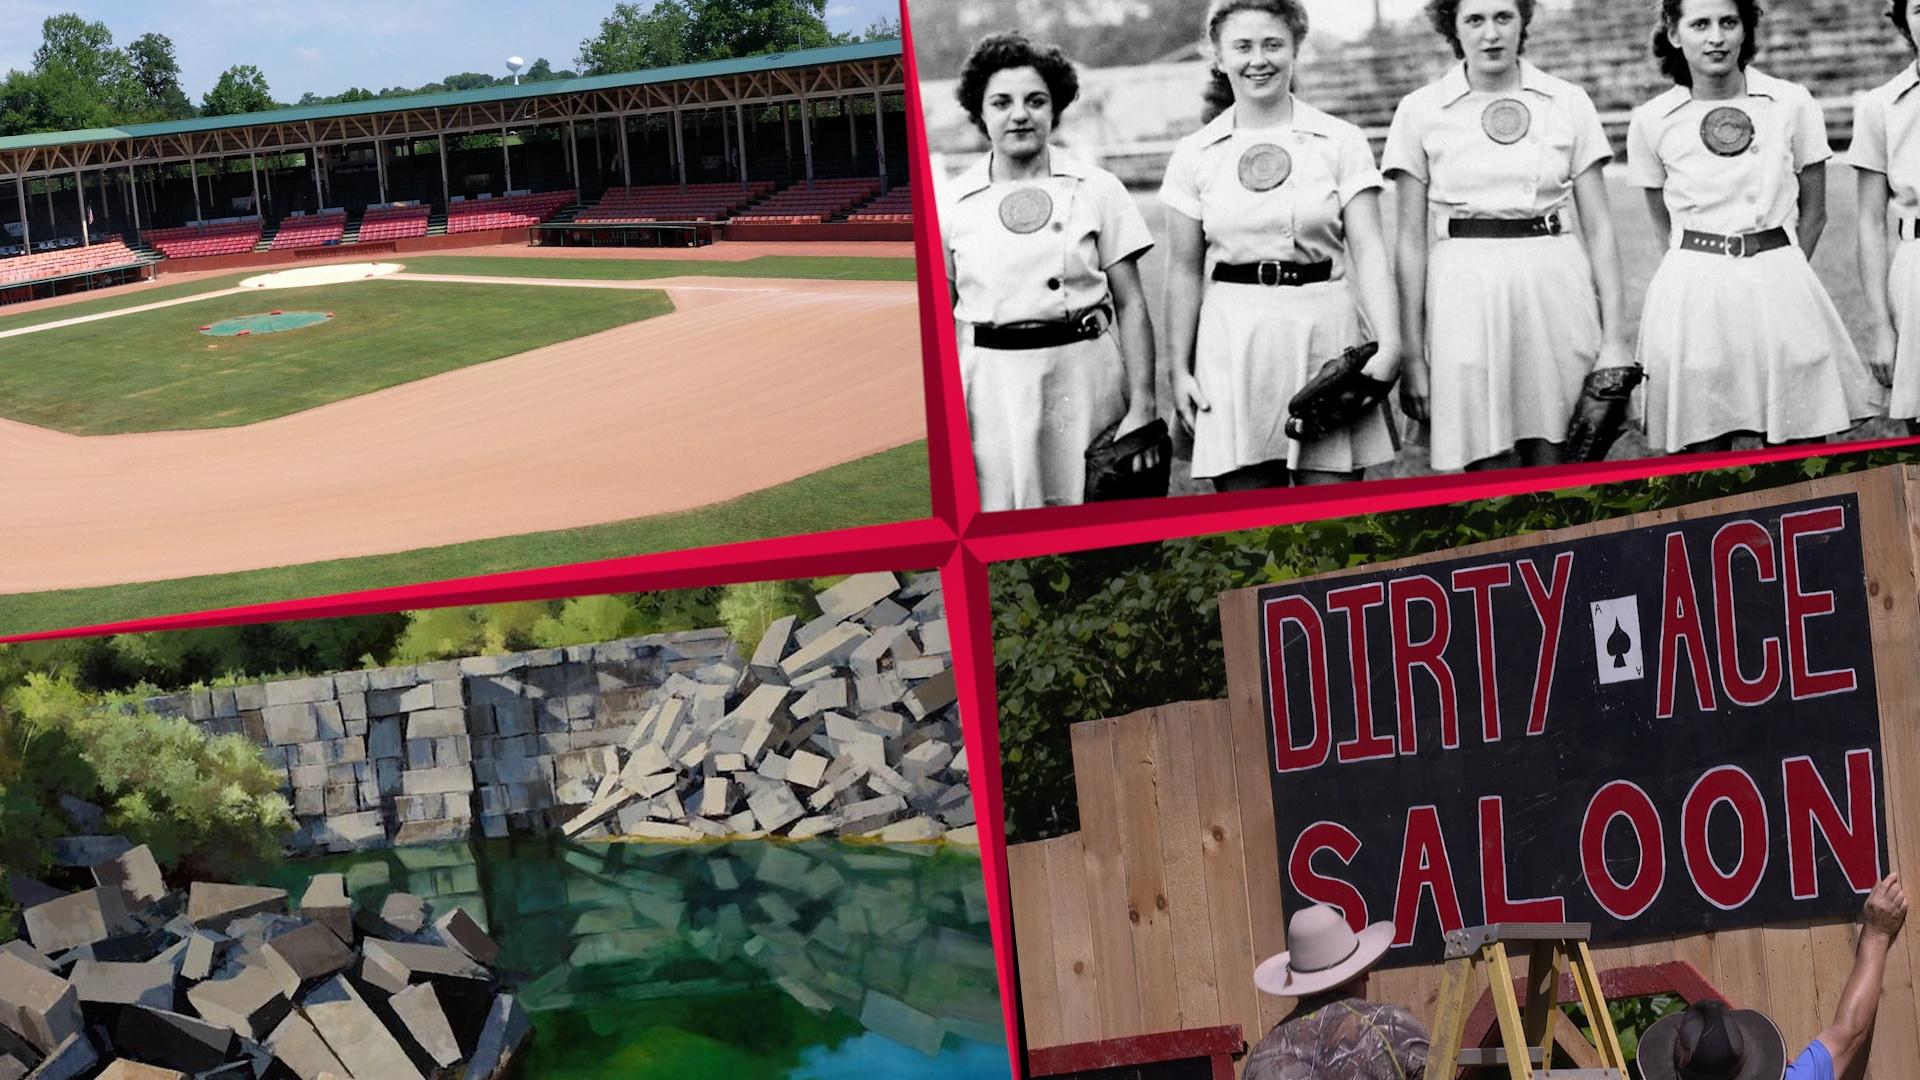 Indiana Baseball Hall of Fame - Visit Dubois County